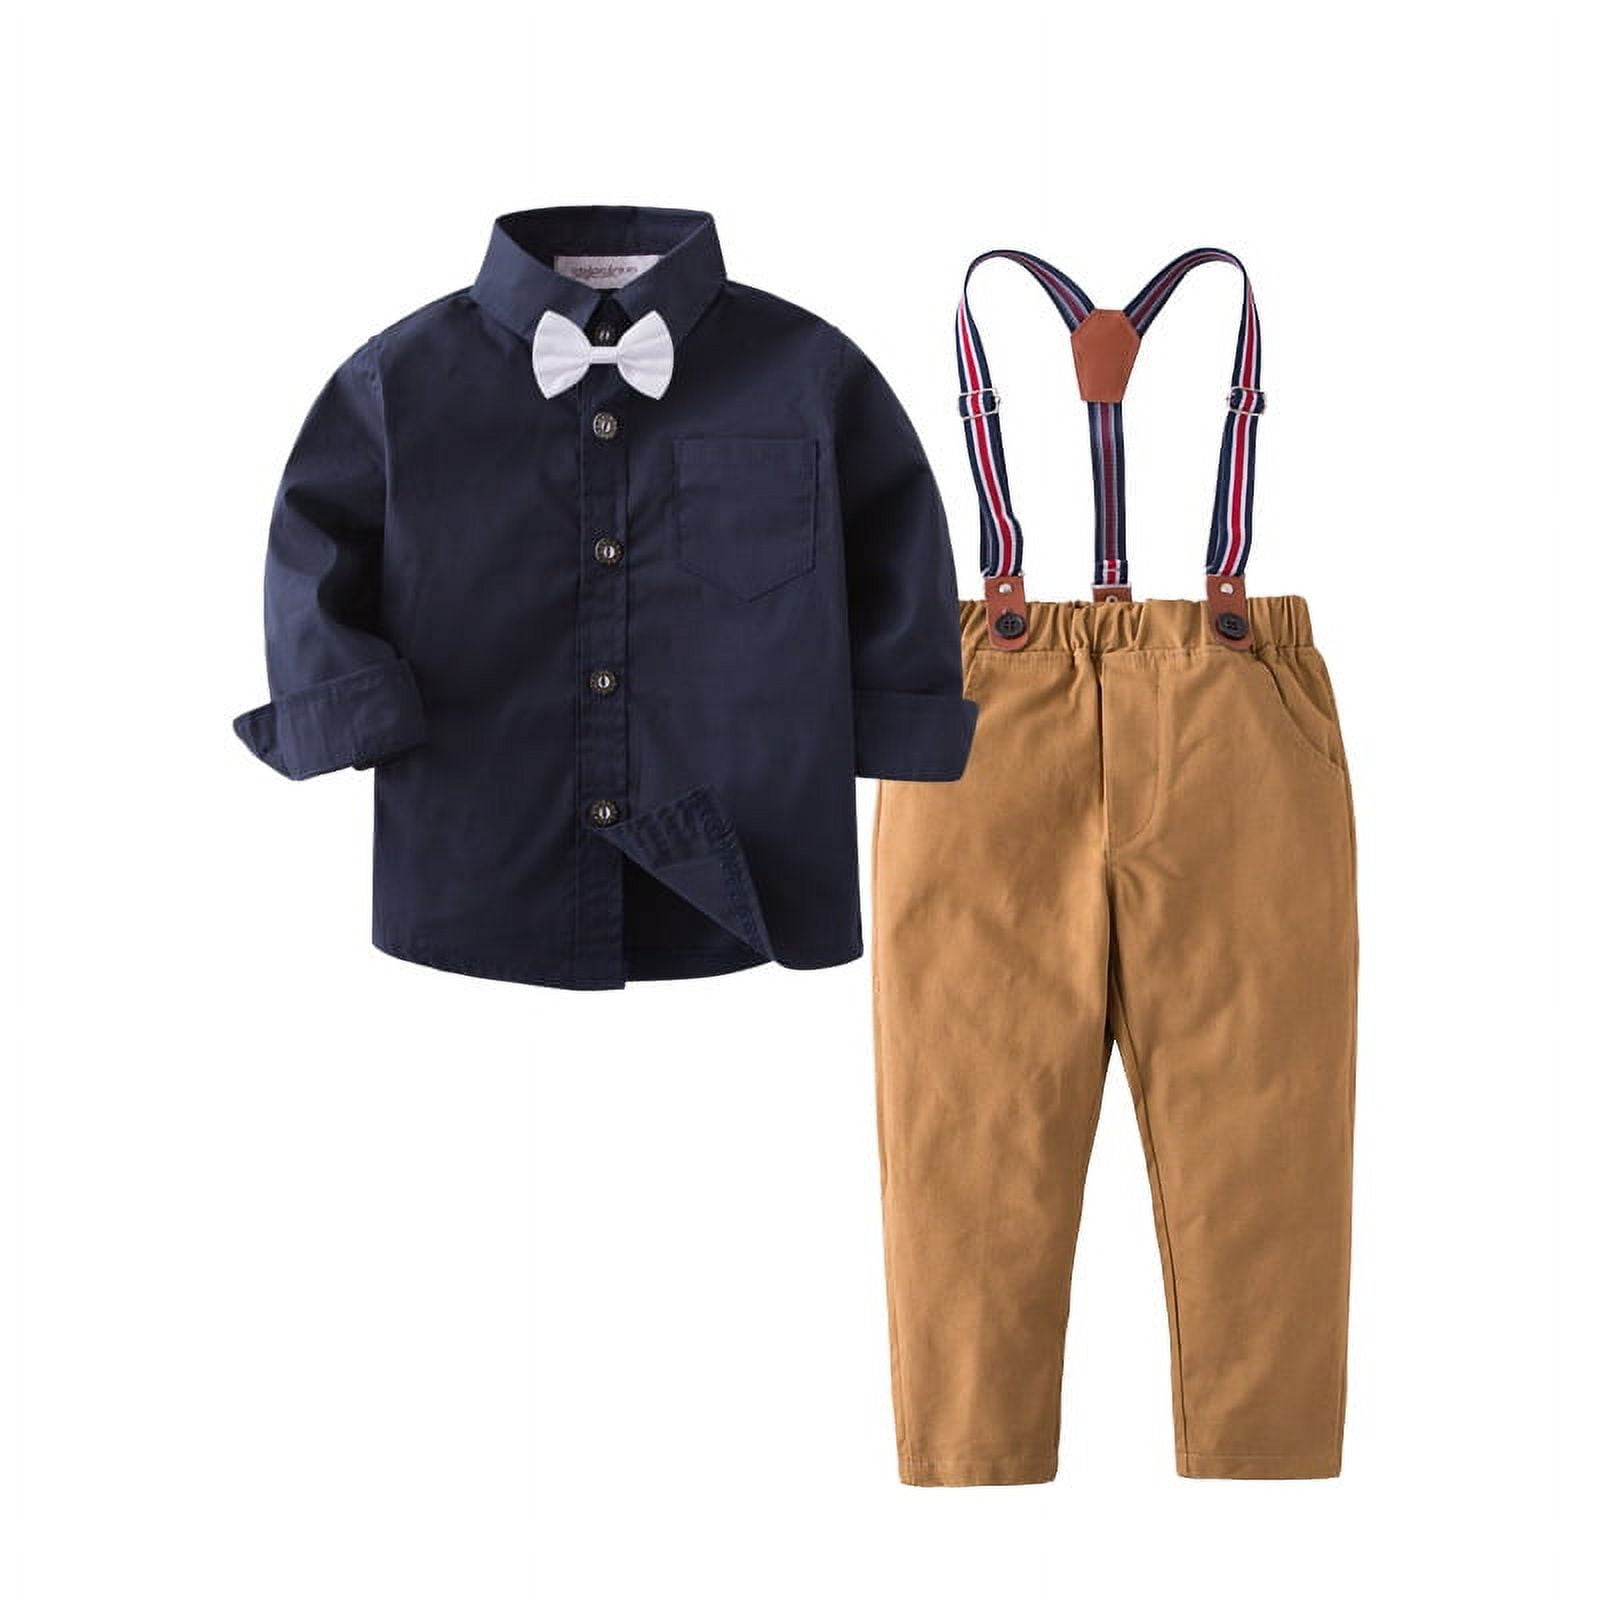 Baby Boys Gentleman Clothes Sets Bow Tie Shirts Suspender Pants Navy Blue Shirt Khaki pants 2 3 Years 4d5b0a95 6fec 4999 9276 24b45ab8dfab.2308b4bec205053187379a4b6d666f59